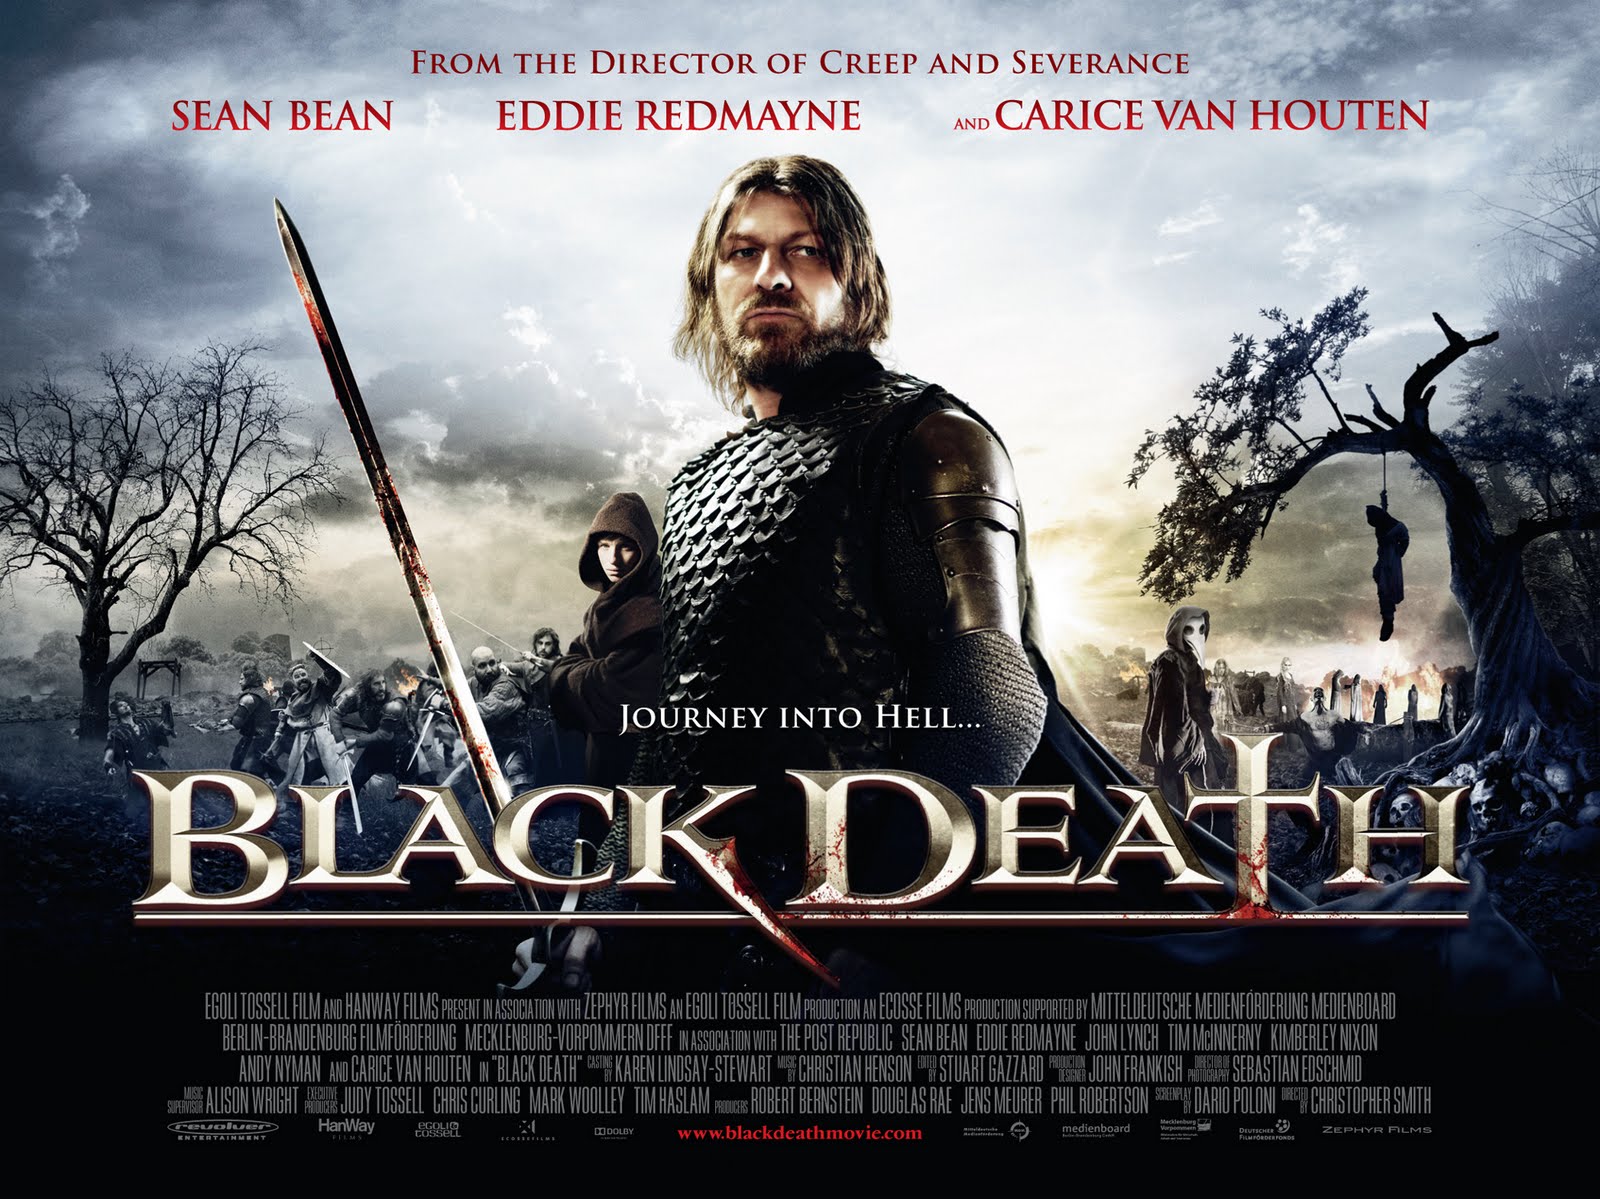 Stiahni si Filmy CZ/SK dabing Cerna smrt / Black Death (2010)(CZ/EN)[1080p] = CSFD 67%